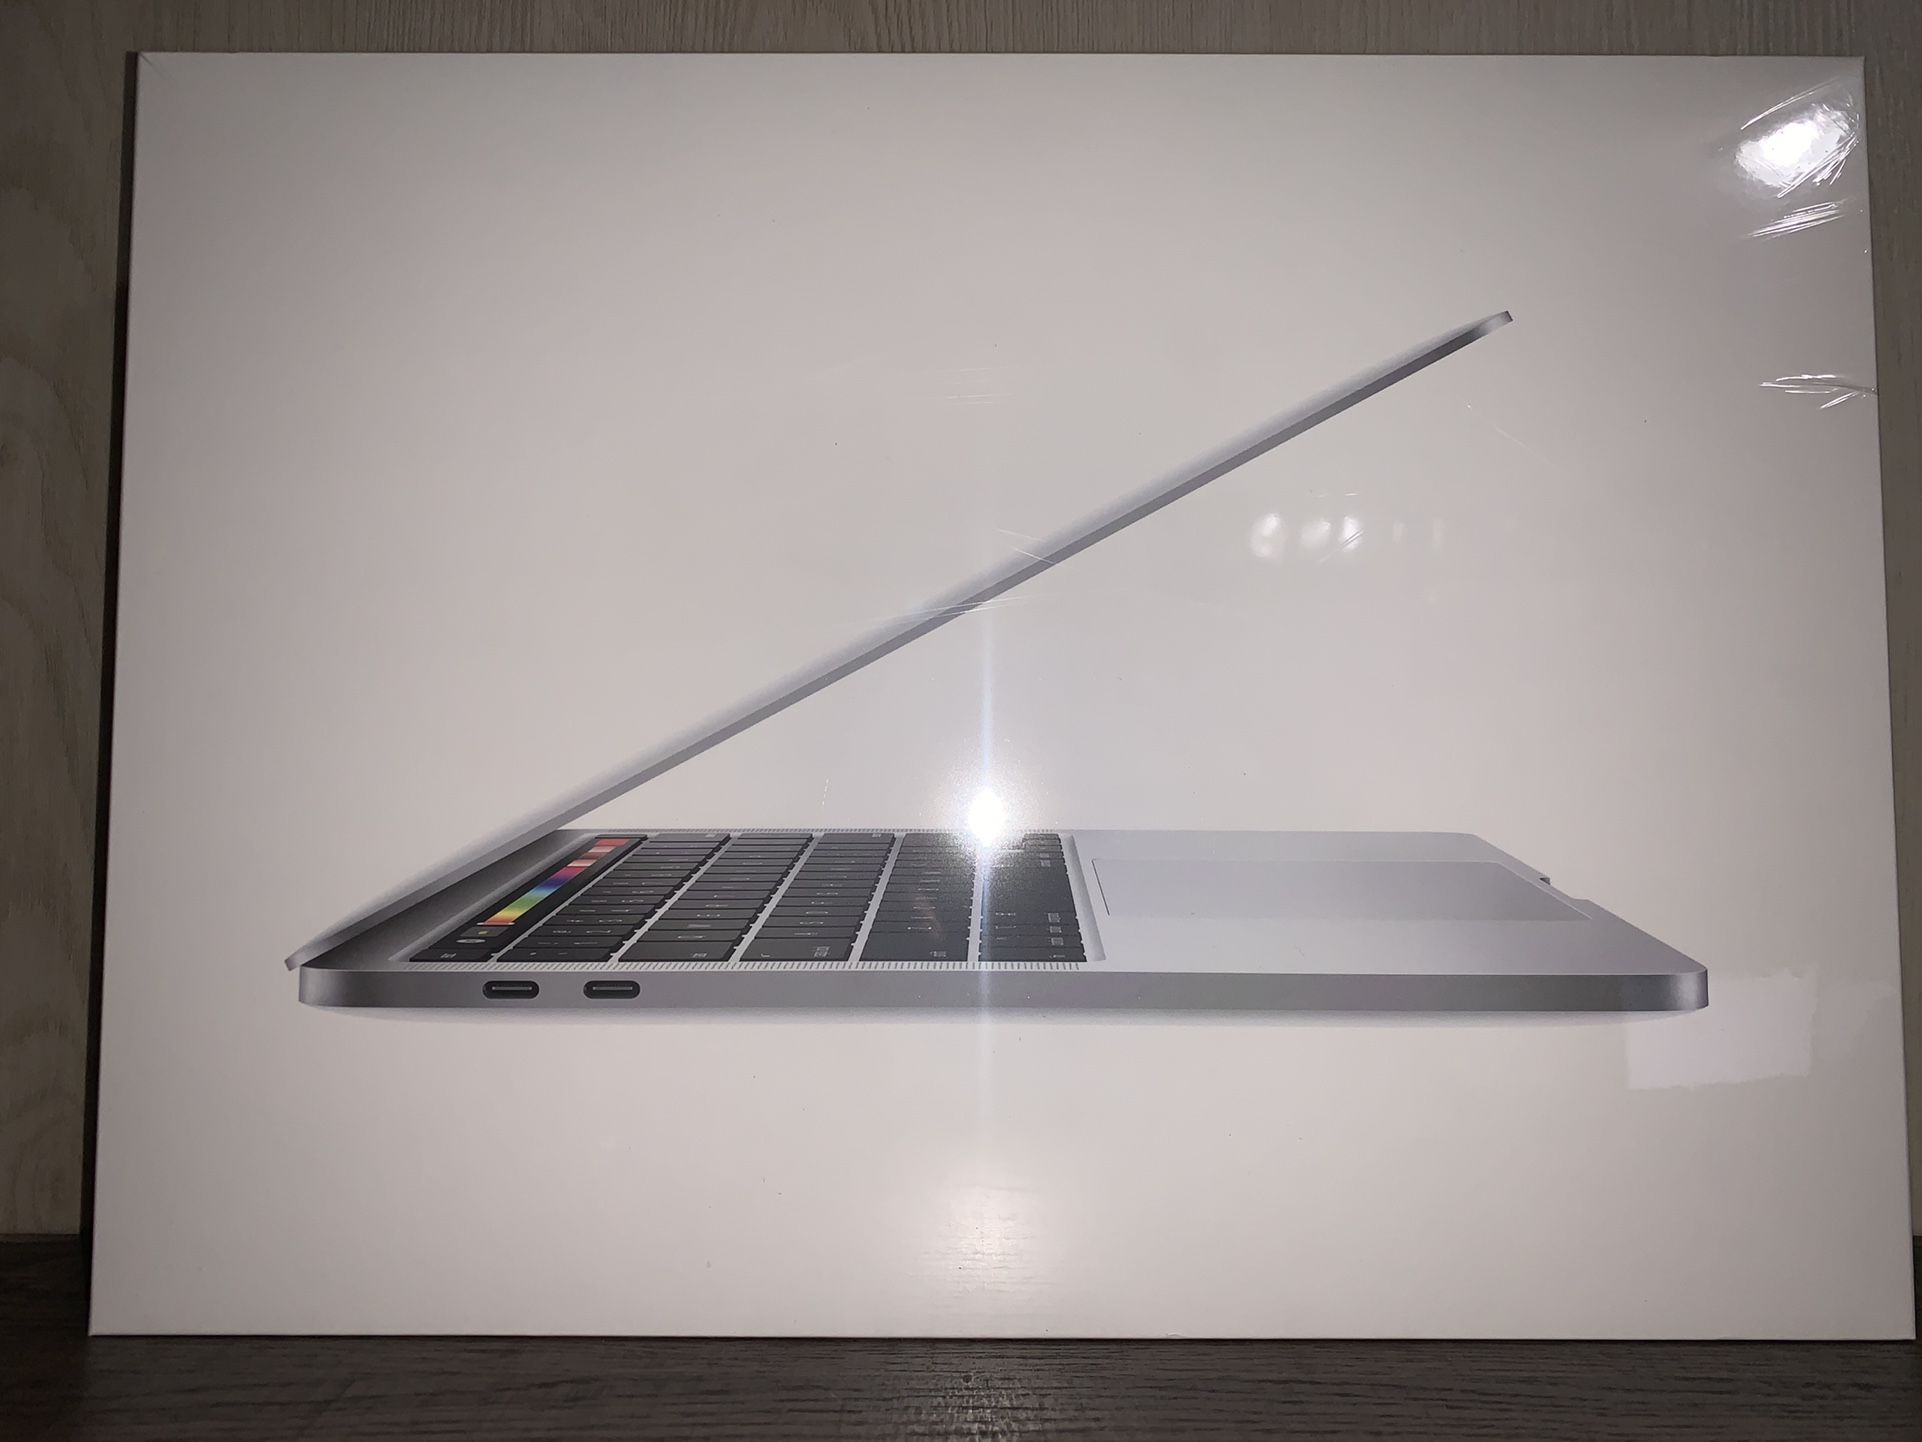 Brand New MacBook Pro (Early 2020 Model, 256gb, Silver Model)